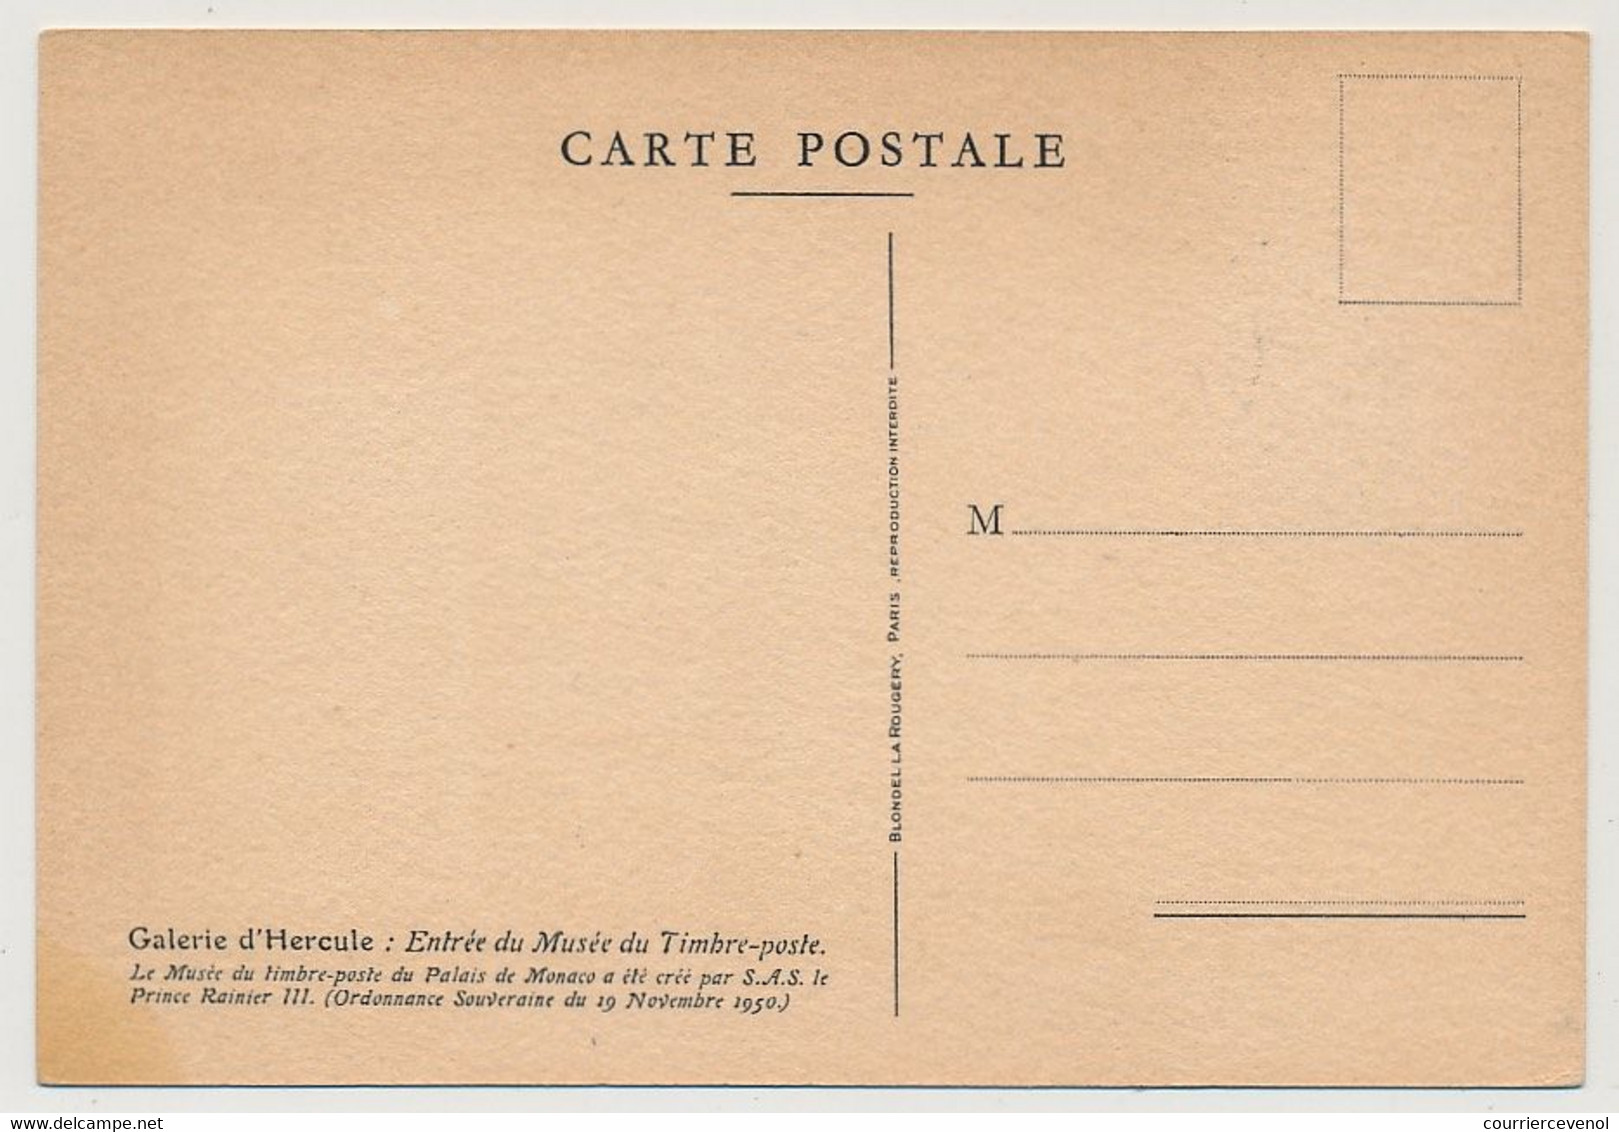 MONACO - Carte Maximum - 15f Palais De Monaco - Galerie D'Hercule - 26/4/1952 - Cartes-Maximum (CM)